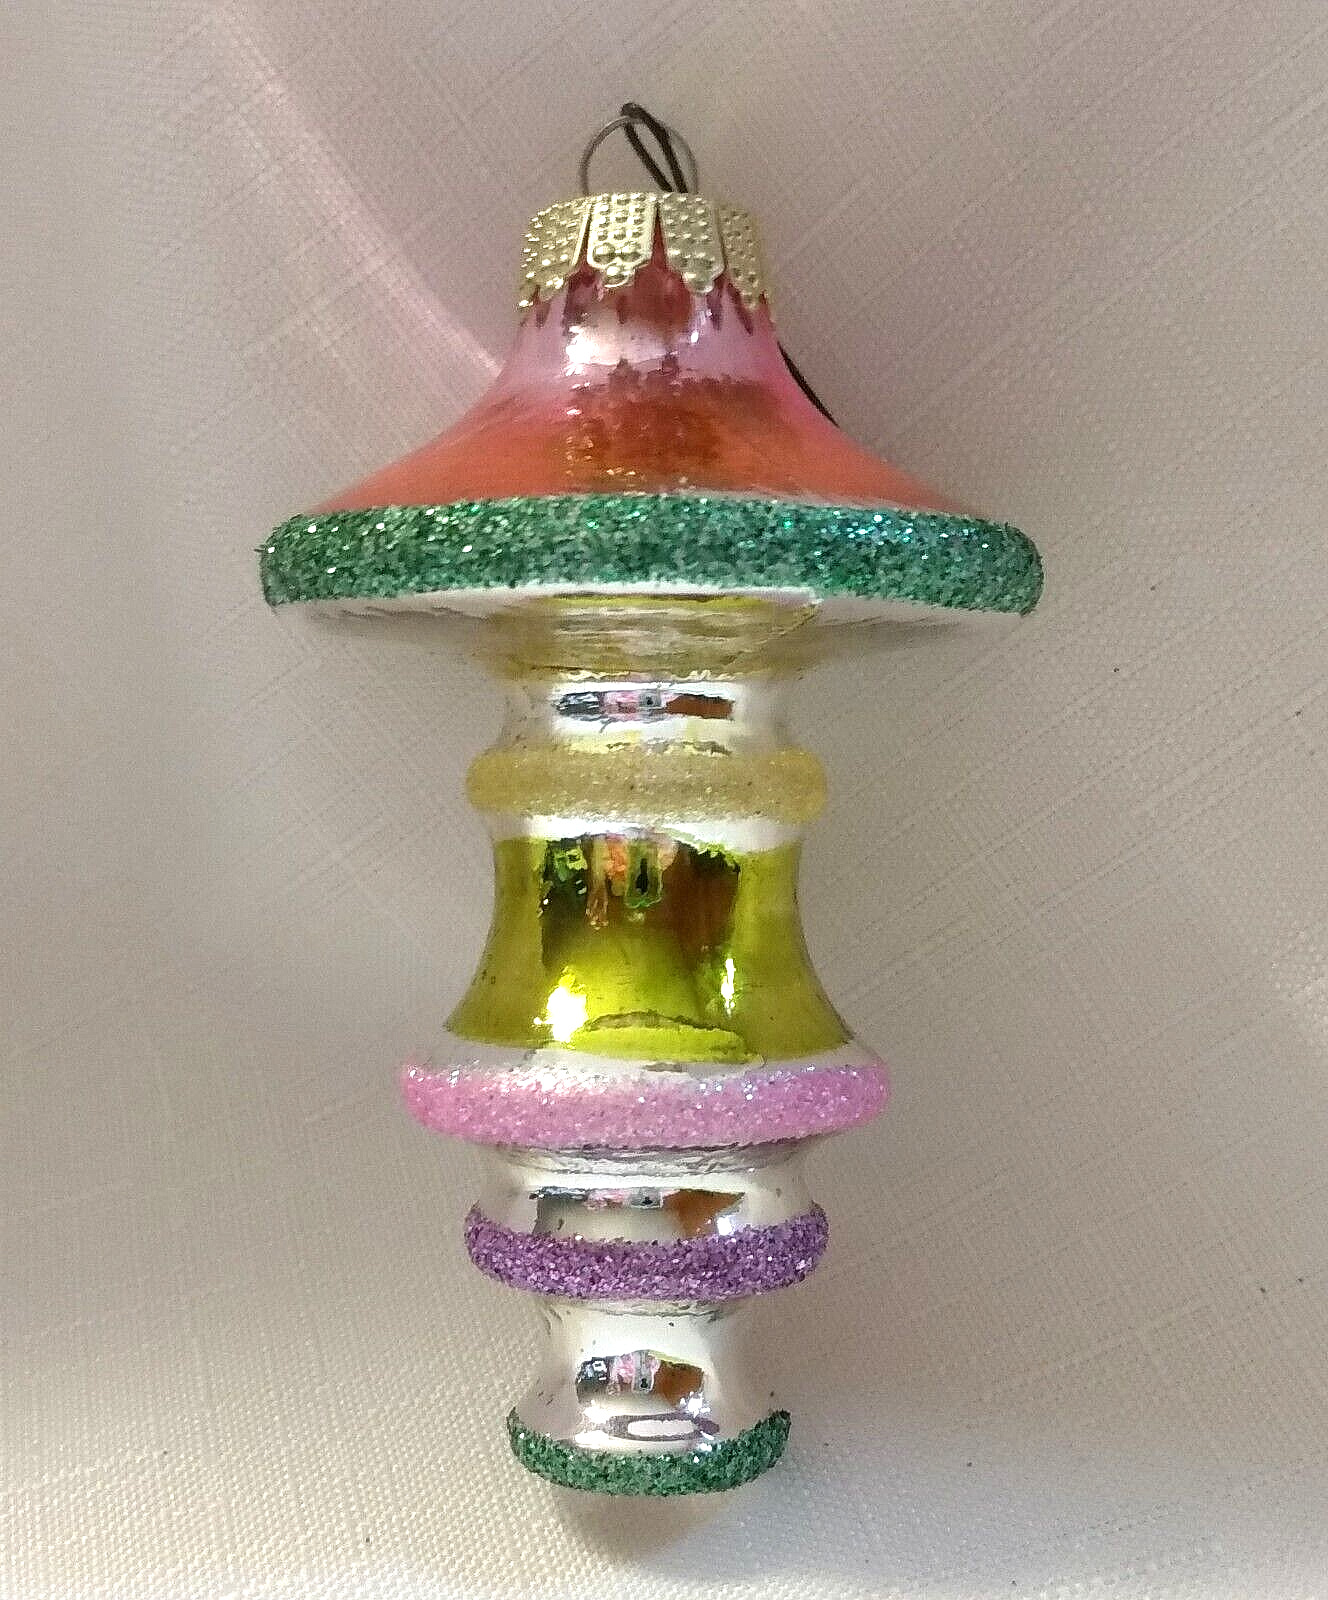 Vintage Shiny Bright Ringed Tree Bell Mushroom Christmas Ornament